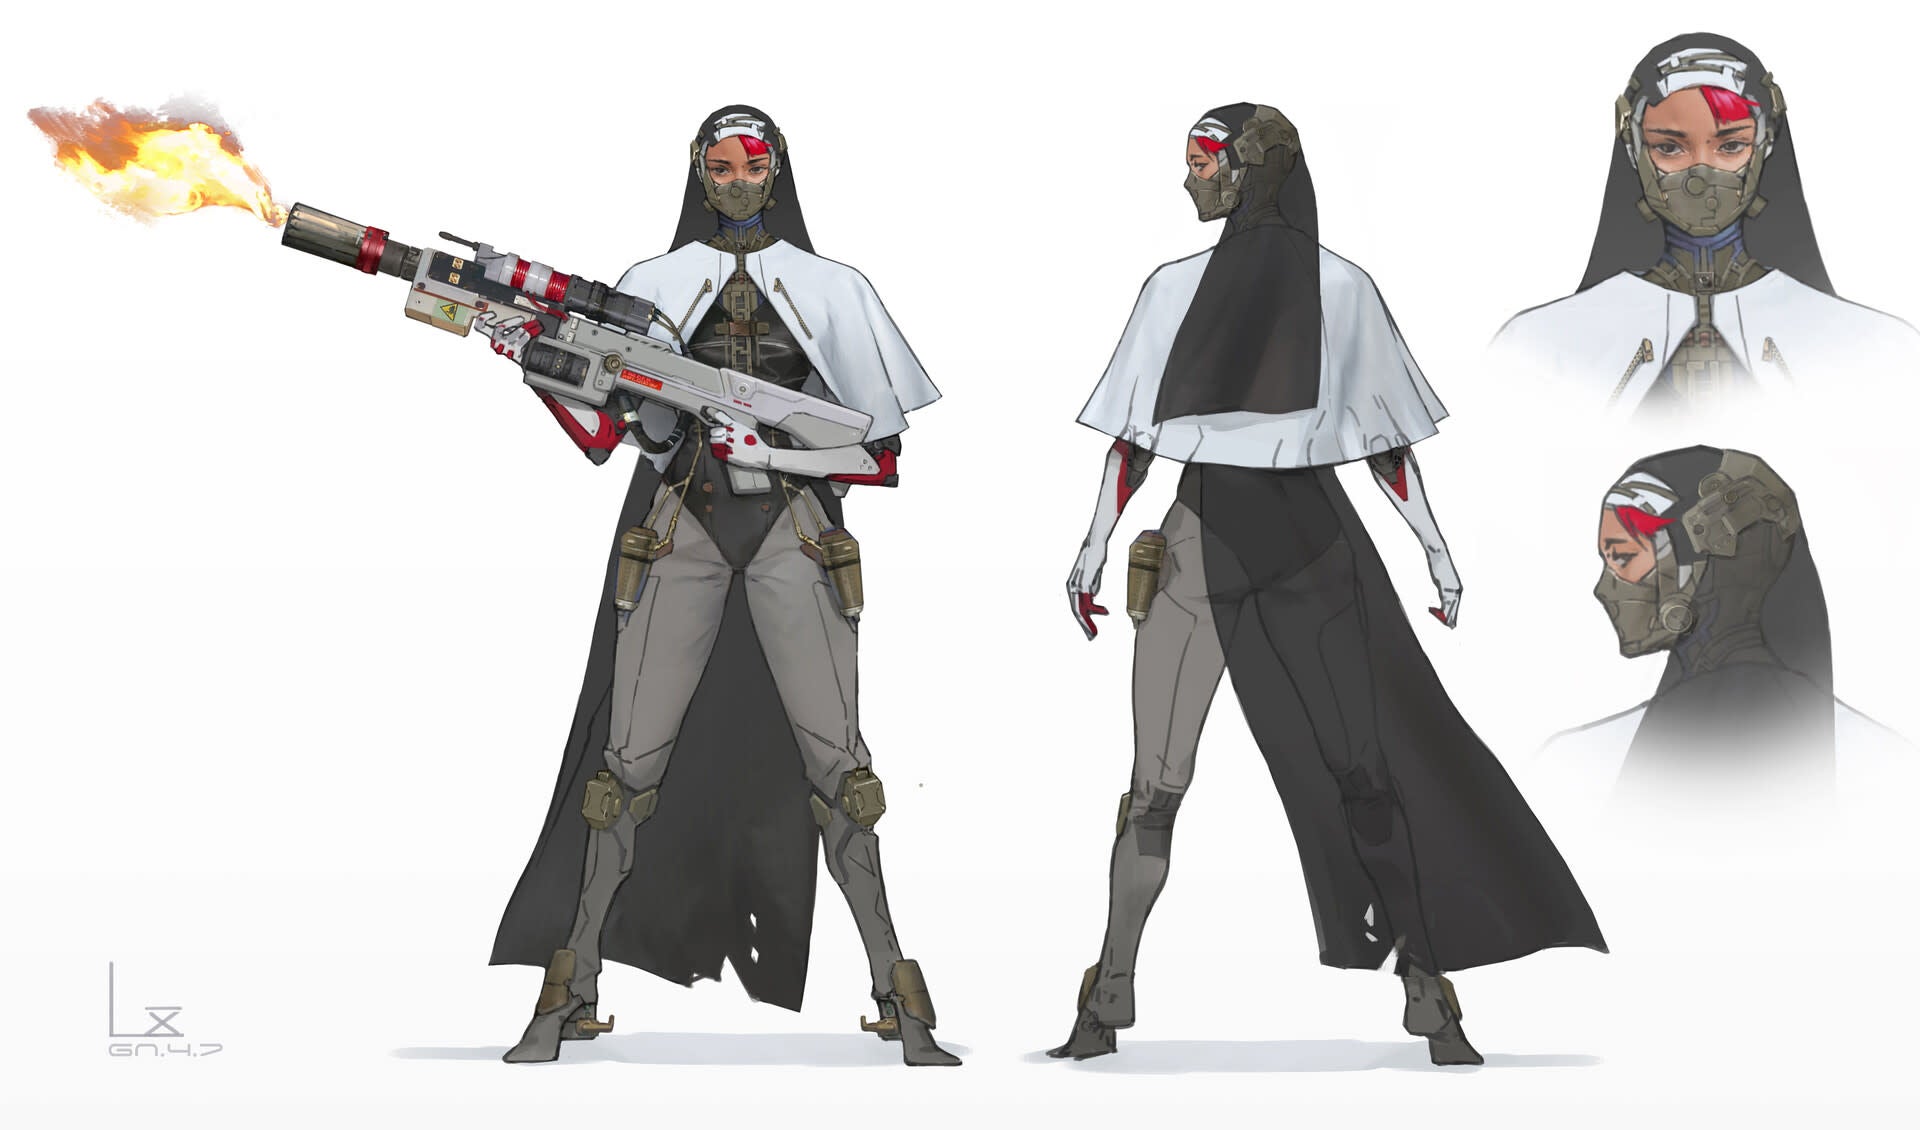 Nuns With Guns